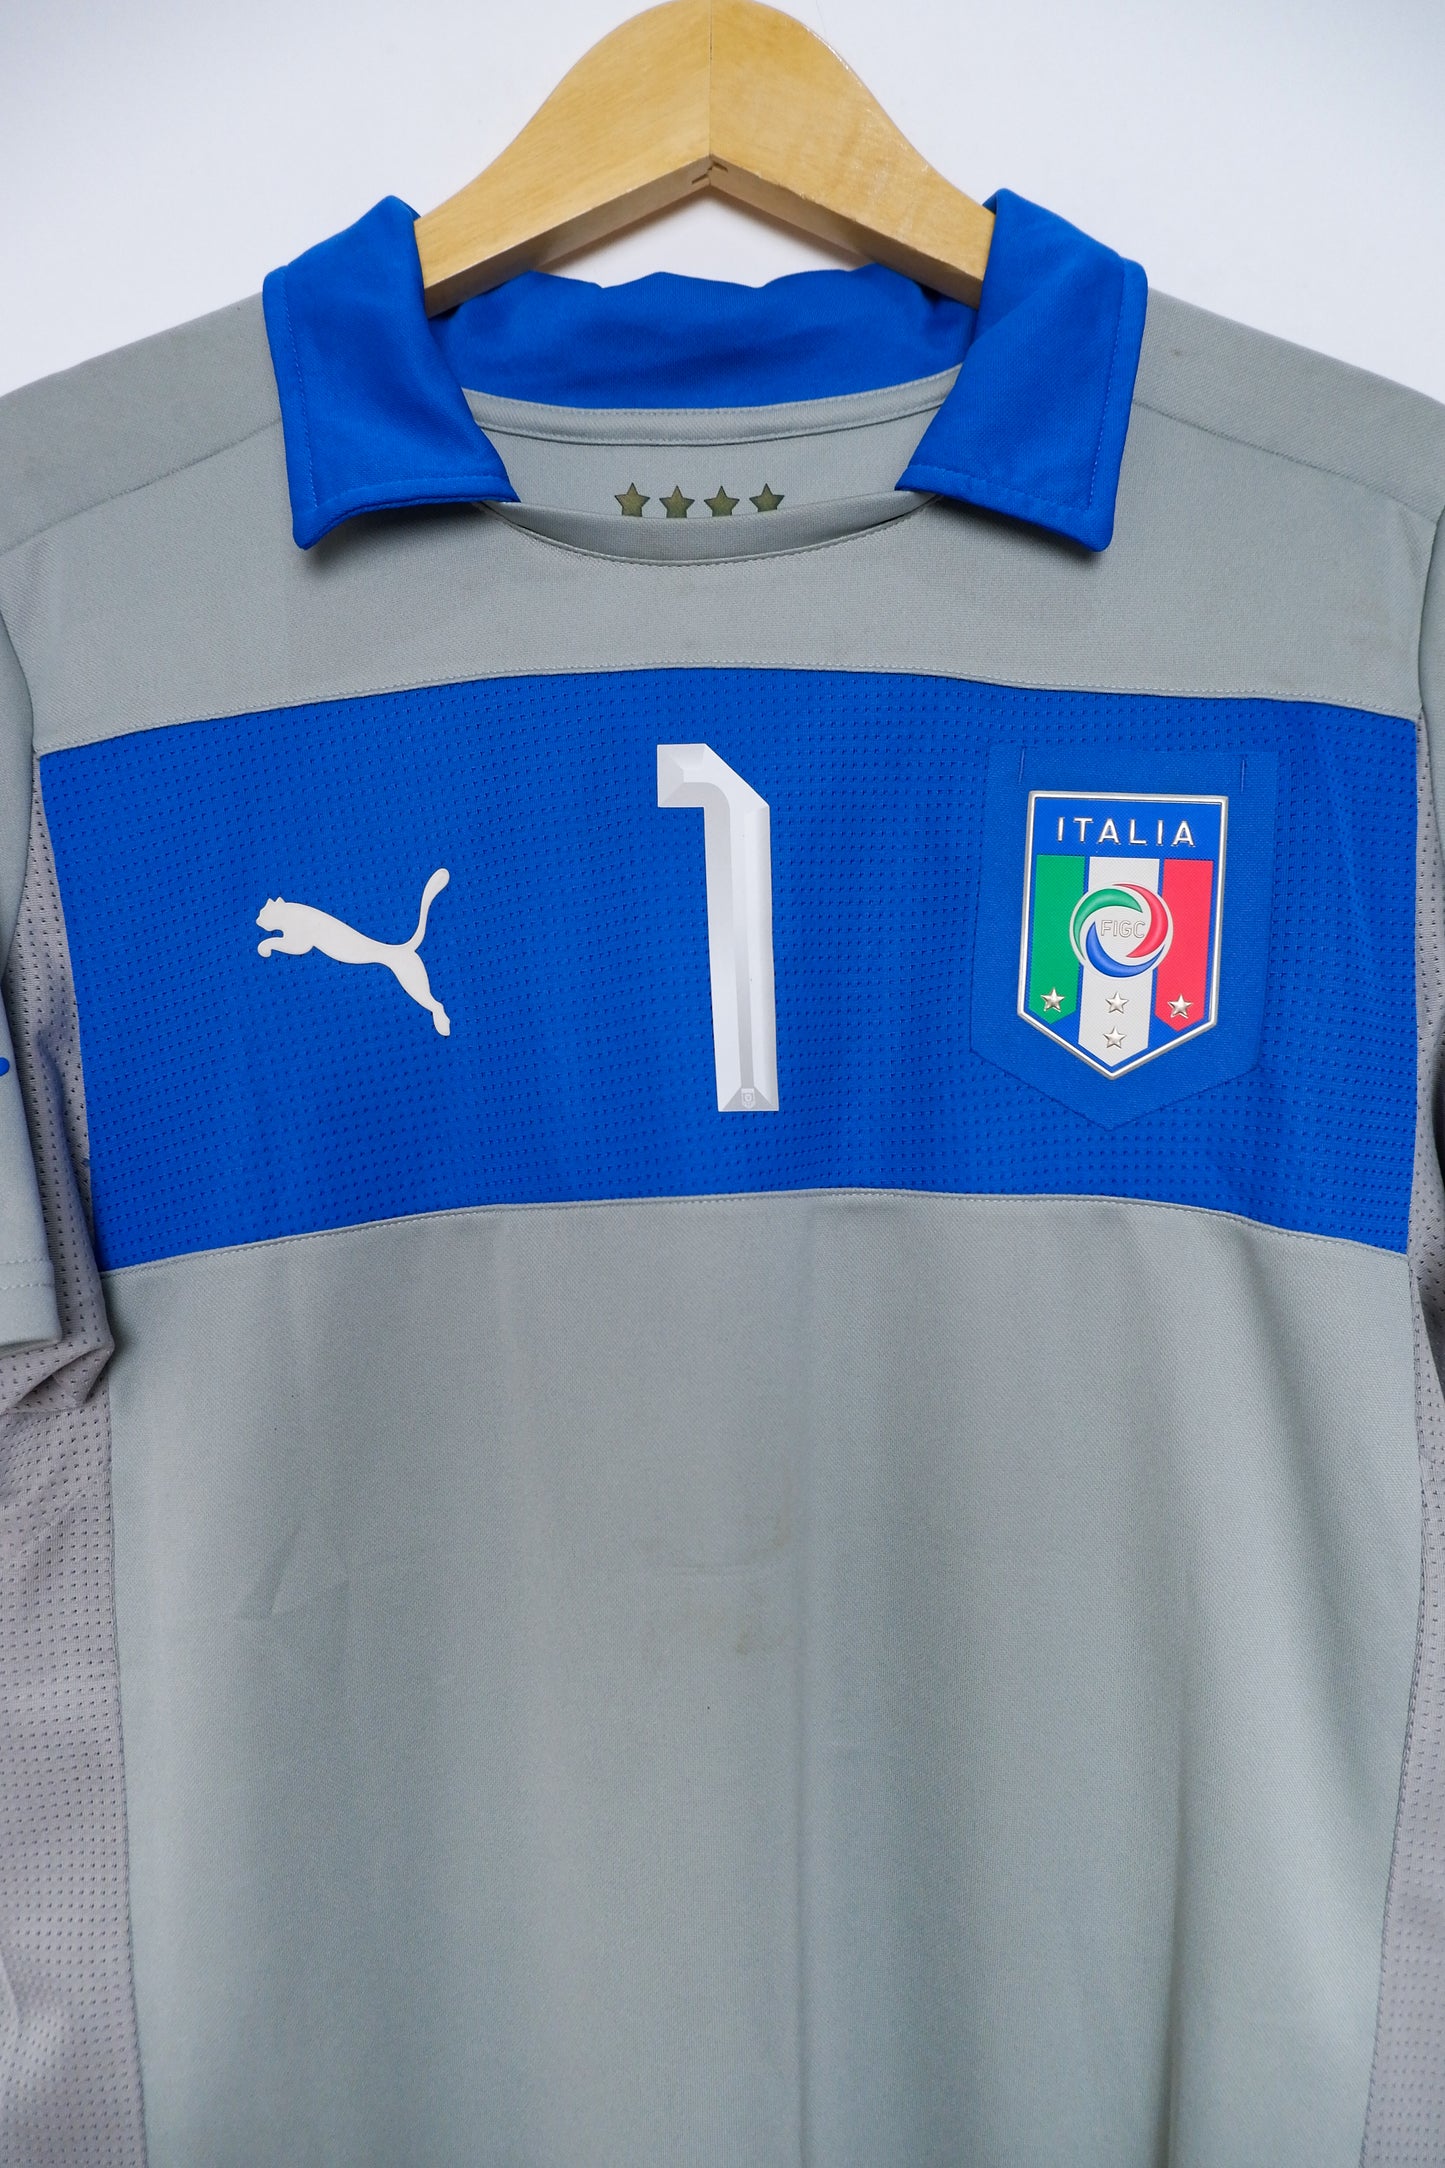 Authentic Italy 2012 Goalkeeper Jersey - Gianluigi Buffon #1 Size M